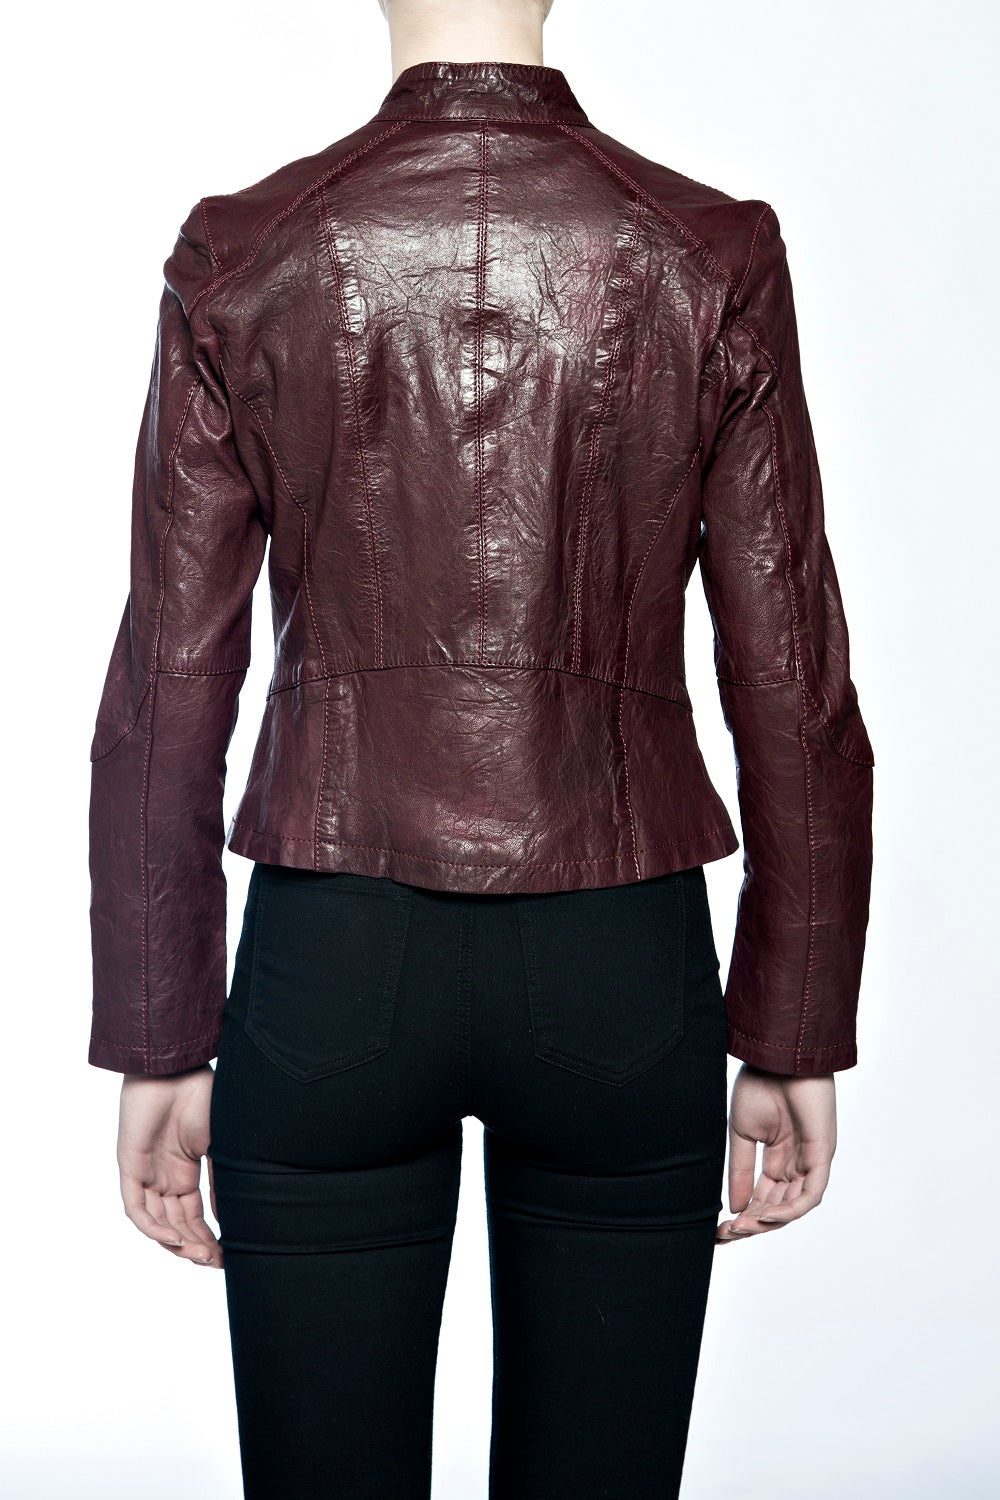 Bano eeMee | proudly Canadian premium luxury leather jackets